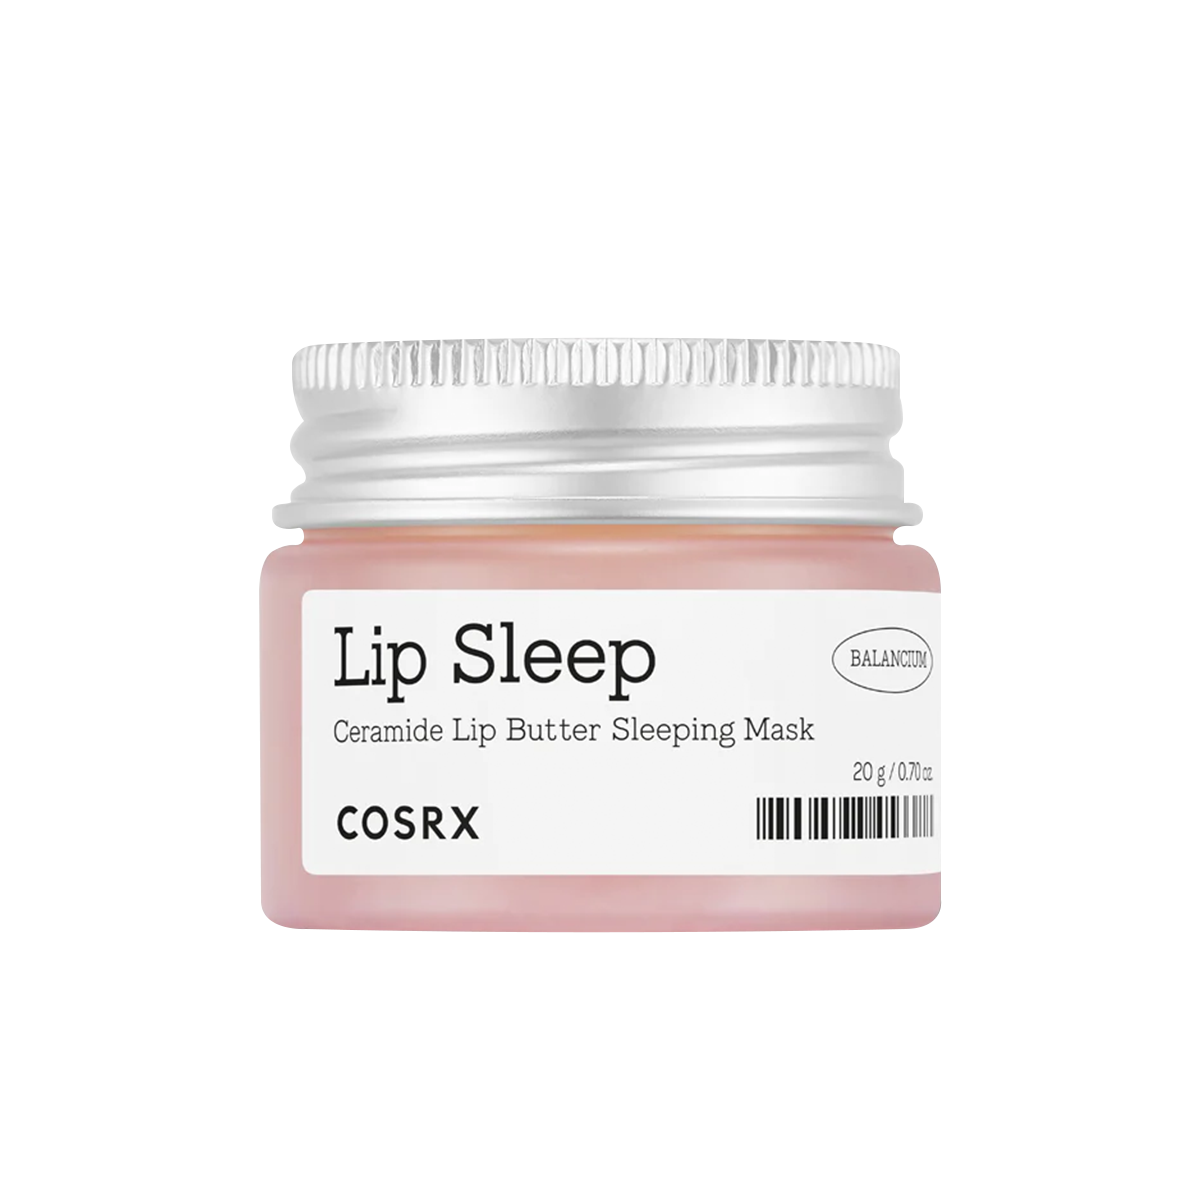 Lip Sleep - Balancium Ceramide Lip Butter Sleeping Mask